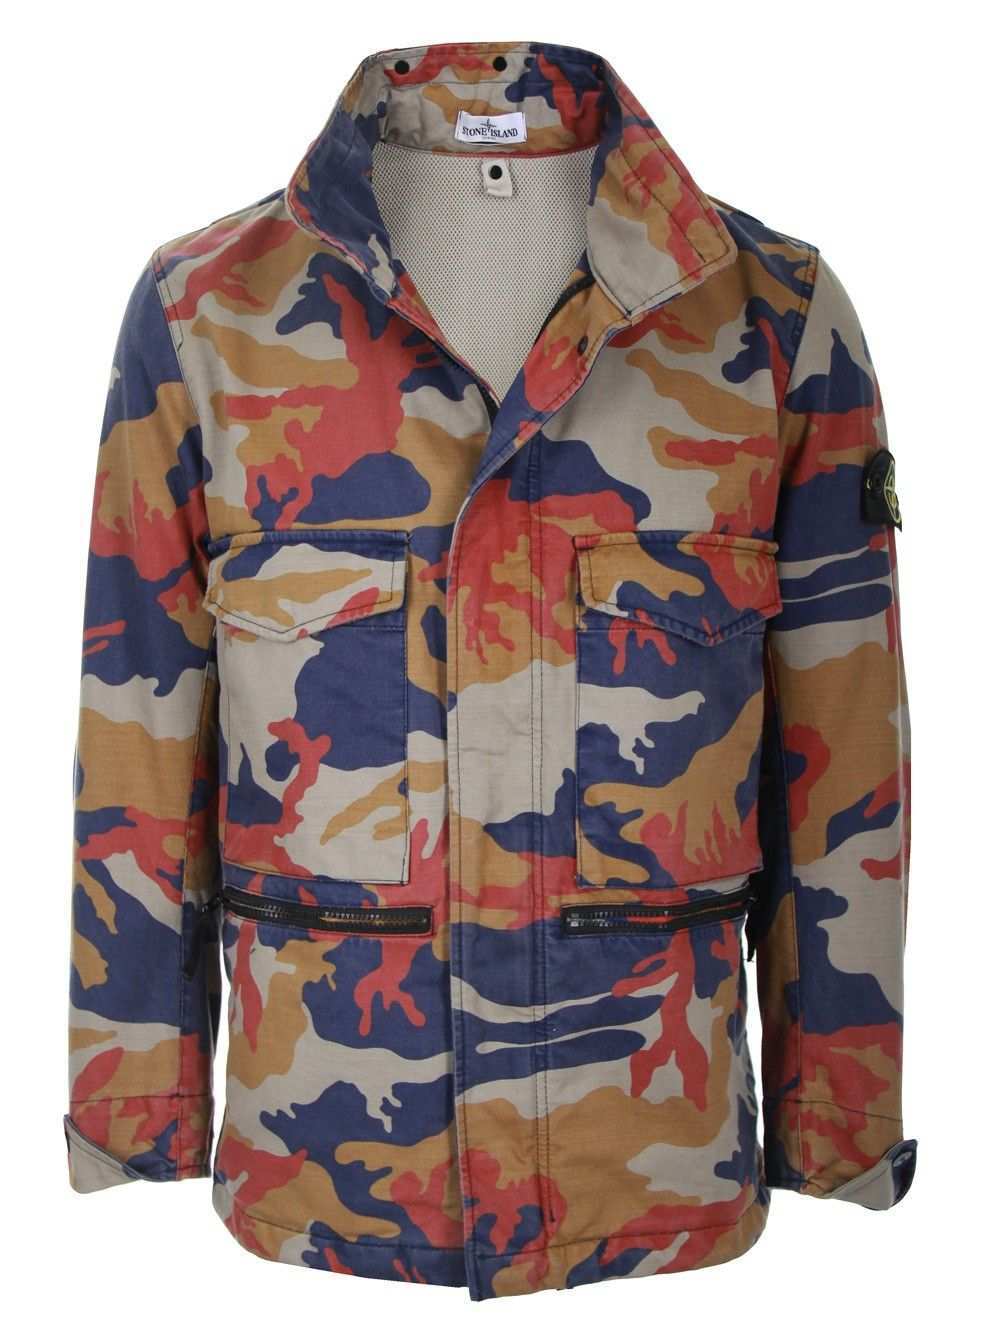 Stone Island Jacket Camouflage Lederjacke Manner Taktische Kleidung Manner Outfit